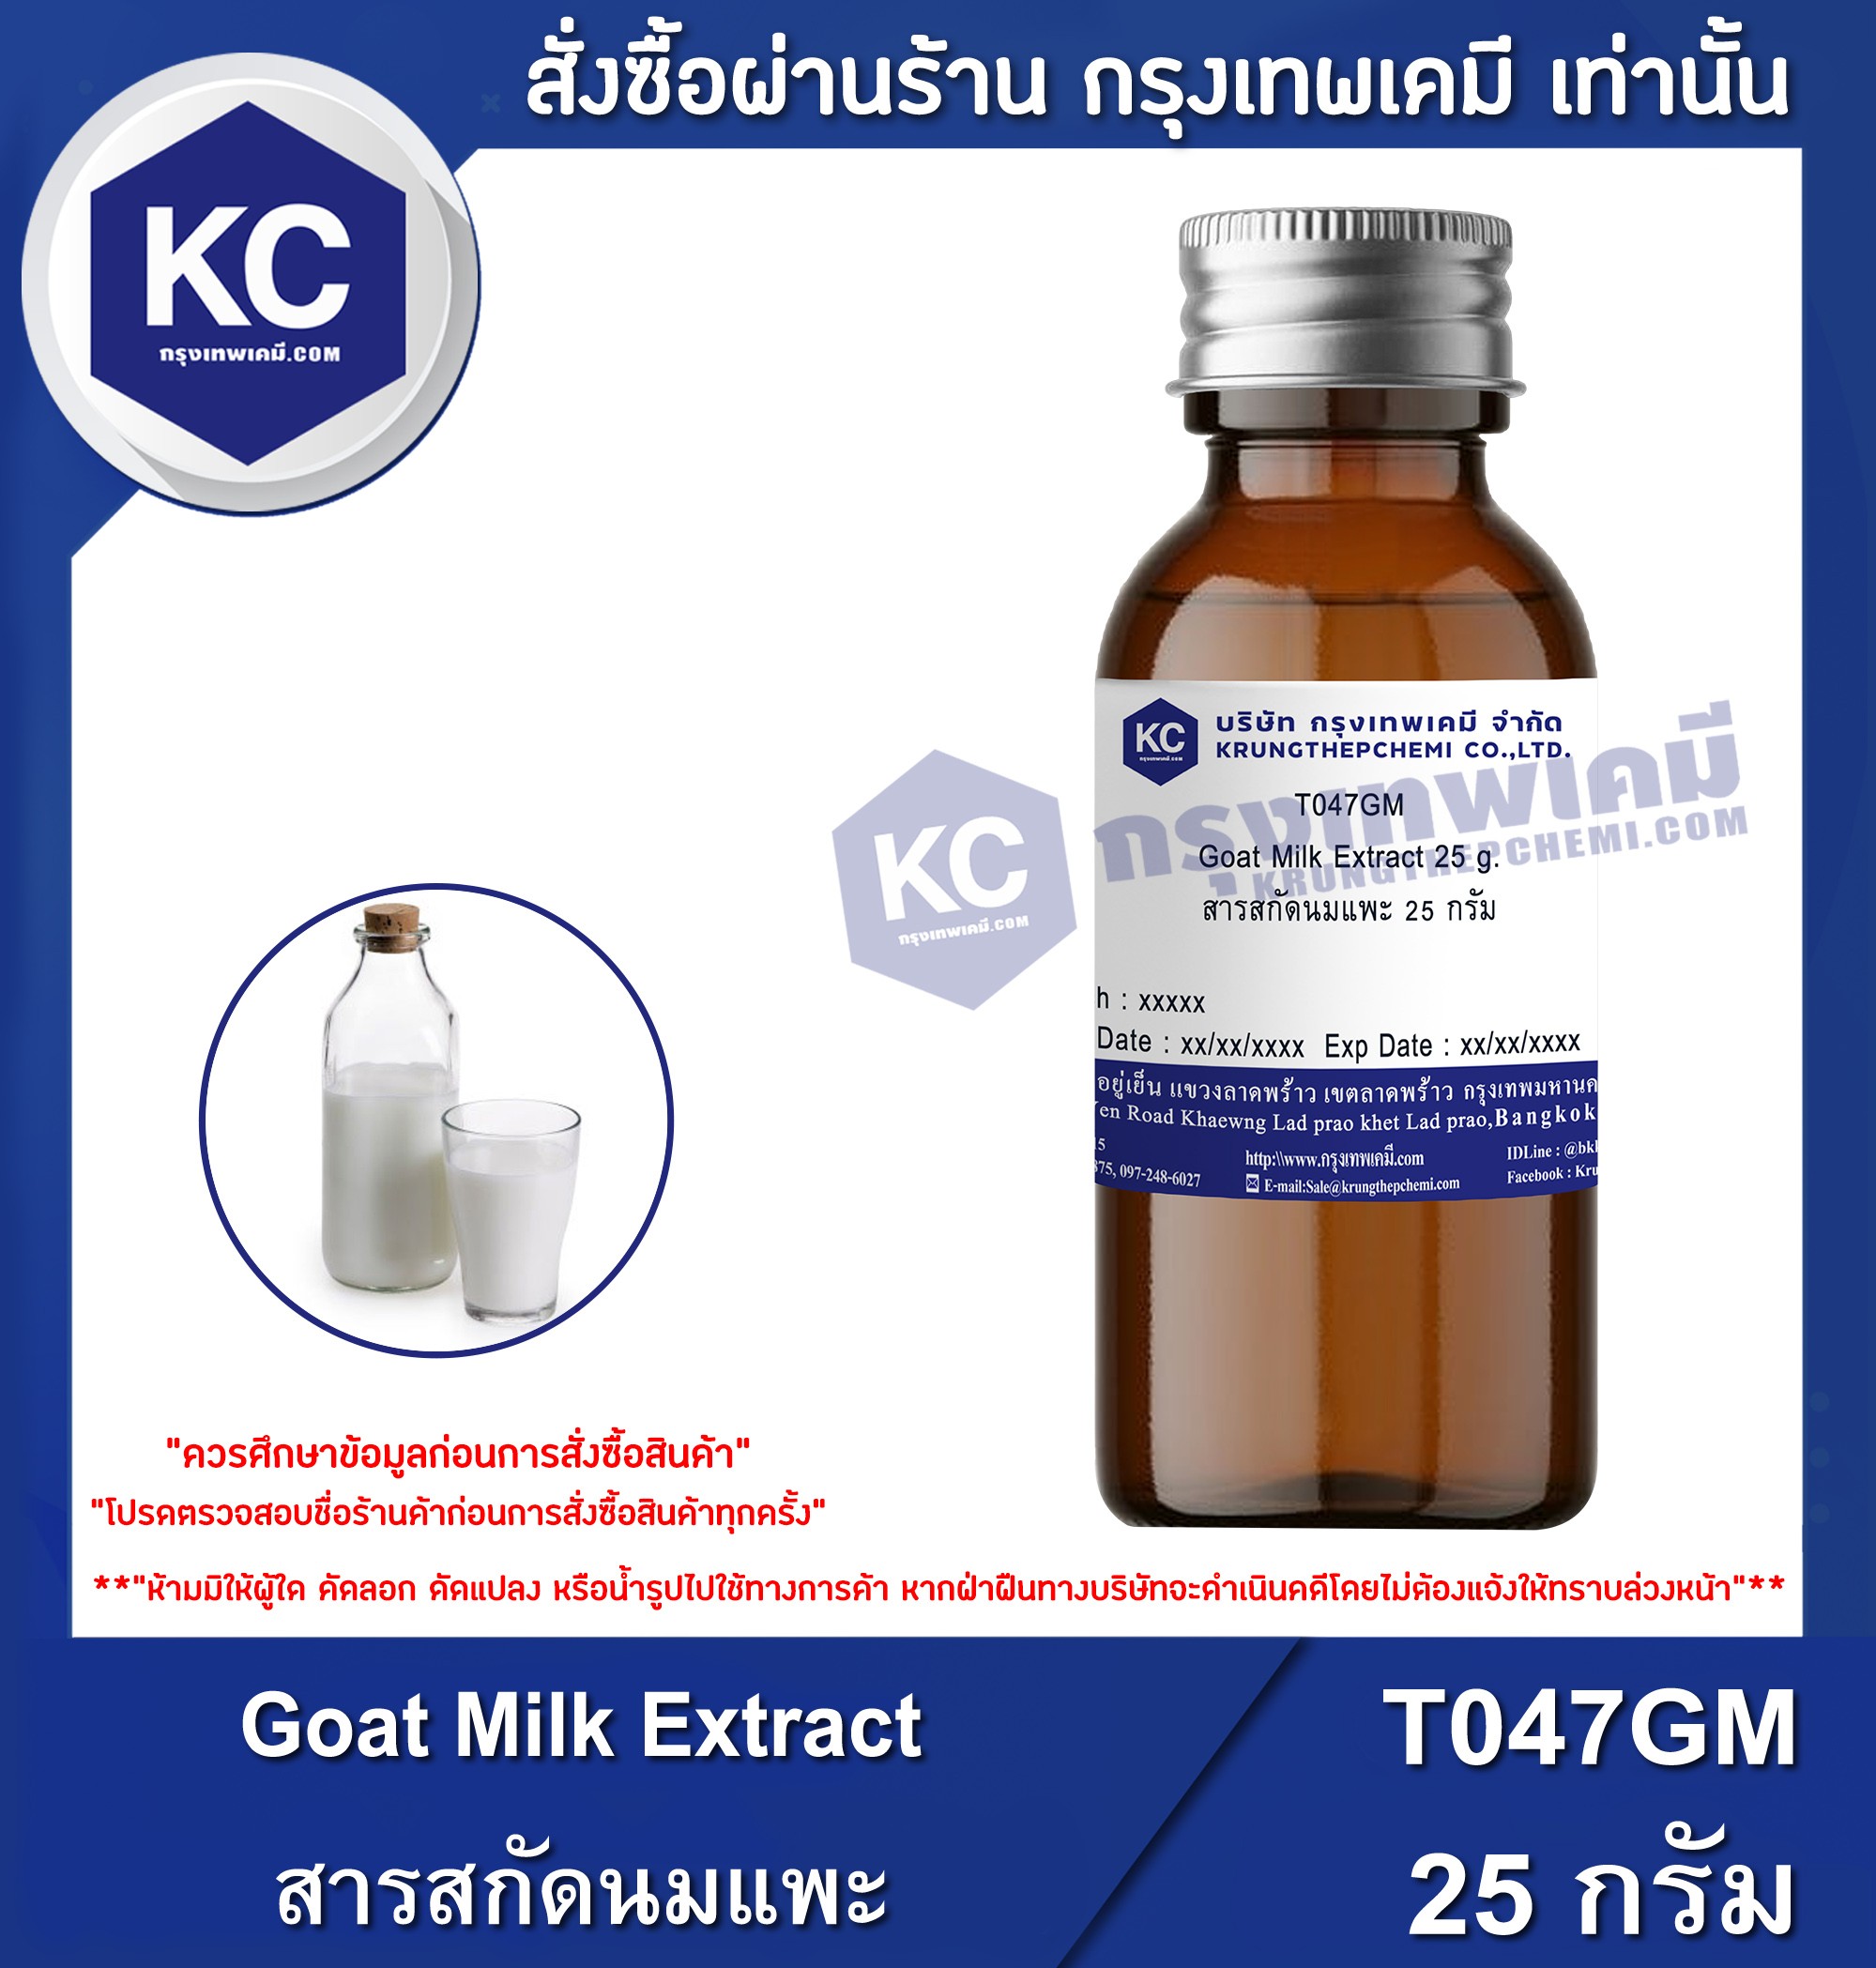 Goat Milk Extract / สารสกัดนมแพะ (Cosmatic grade) (T047GM)